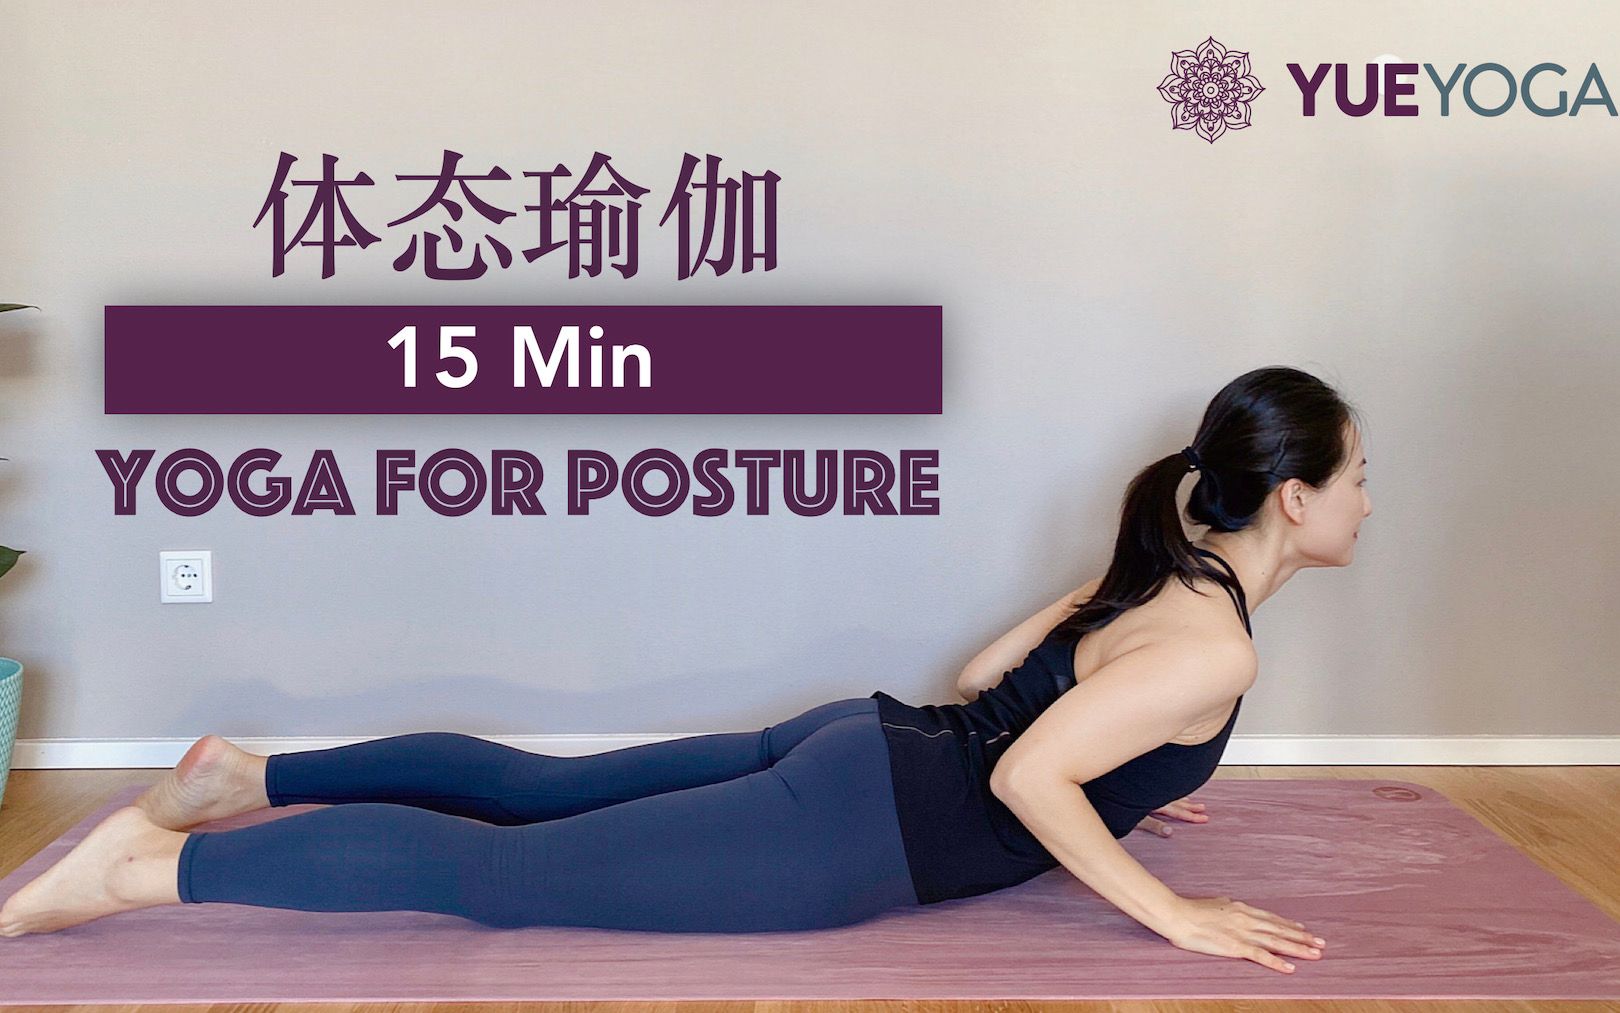 【体态矫正瑜伽】改善圆肩驼背 强化腰背力量 提升气质形象 Yoga for Posture | Yue Yoga